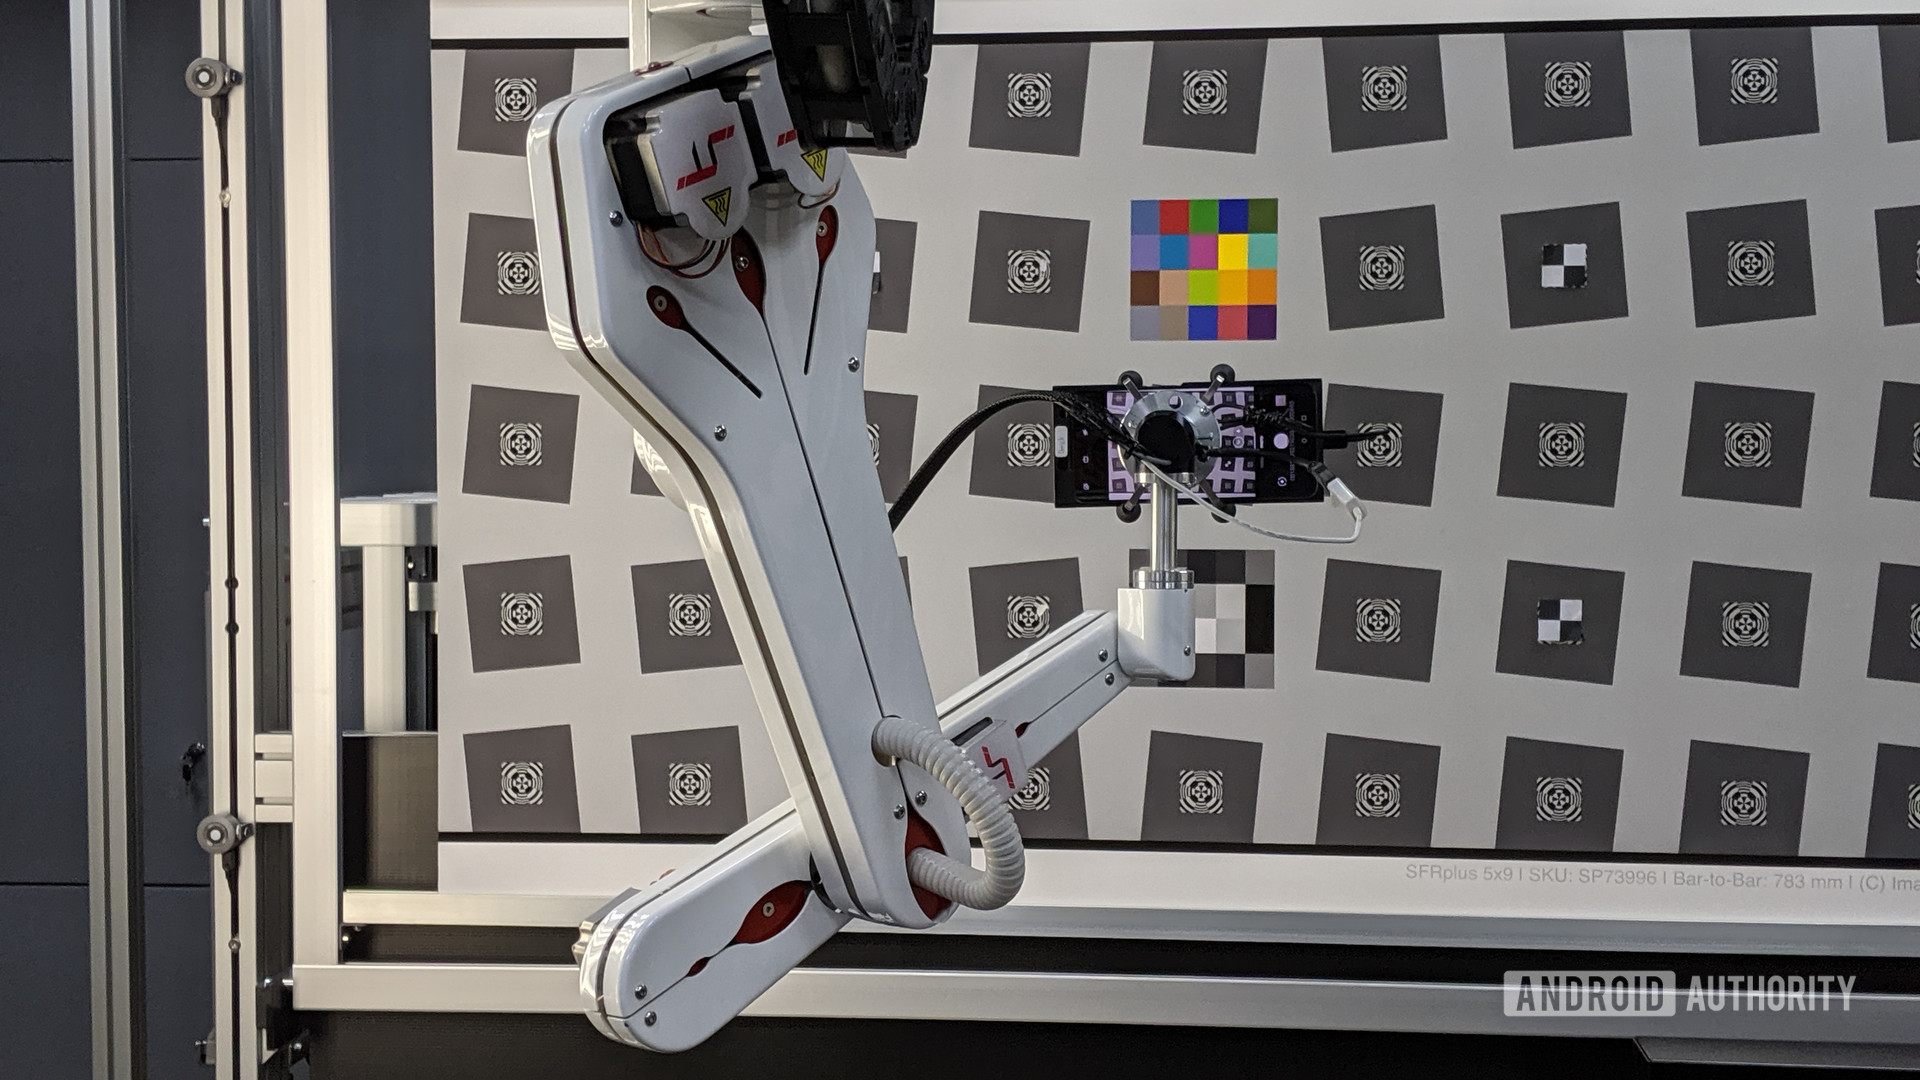 OnePlus相机实验室 - 机器人臂用于模拟多种场景